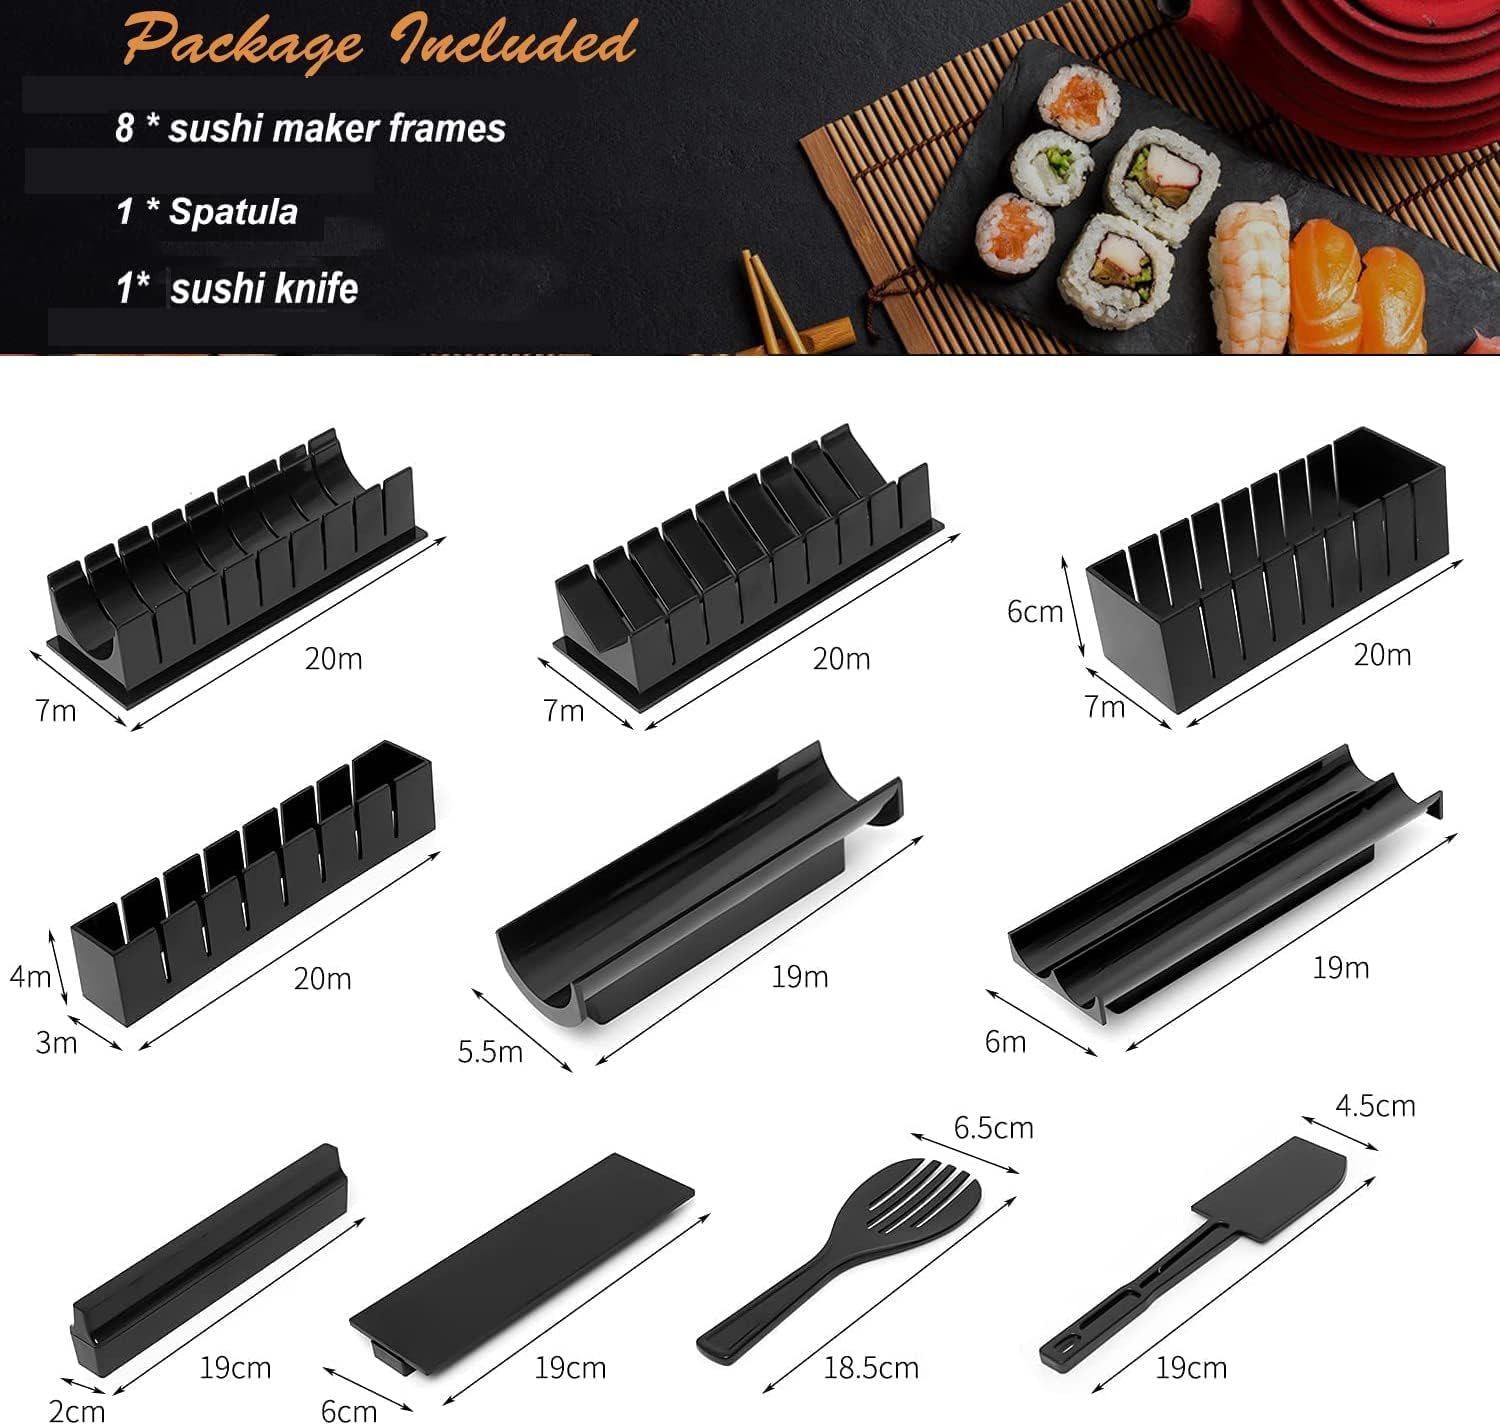 B0B5F87LT3   10pcs Sushi Maker Making Kit Rice Roller Mold Set for Beginners Kitchen Tool